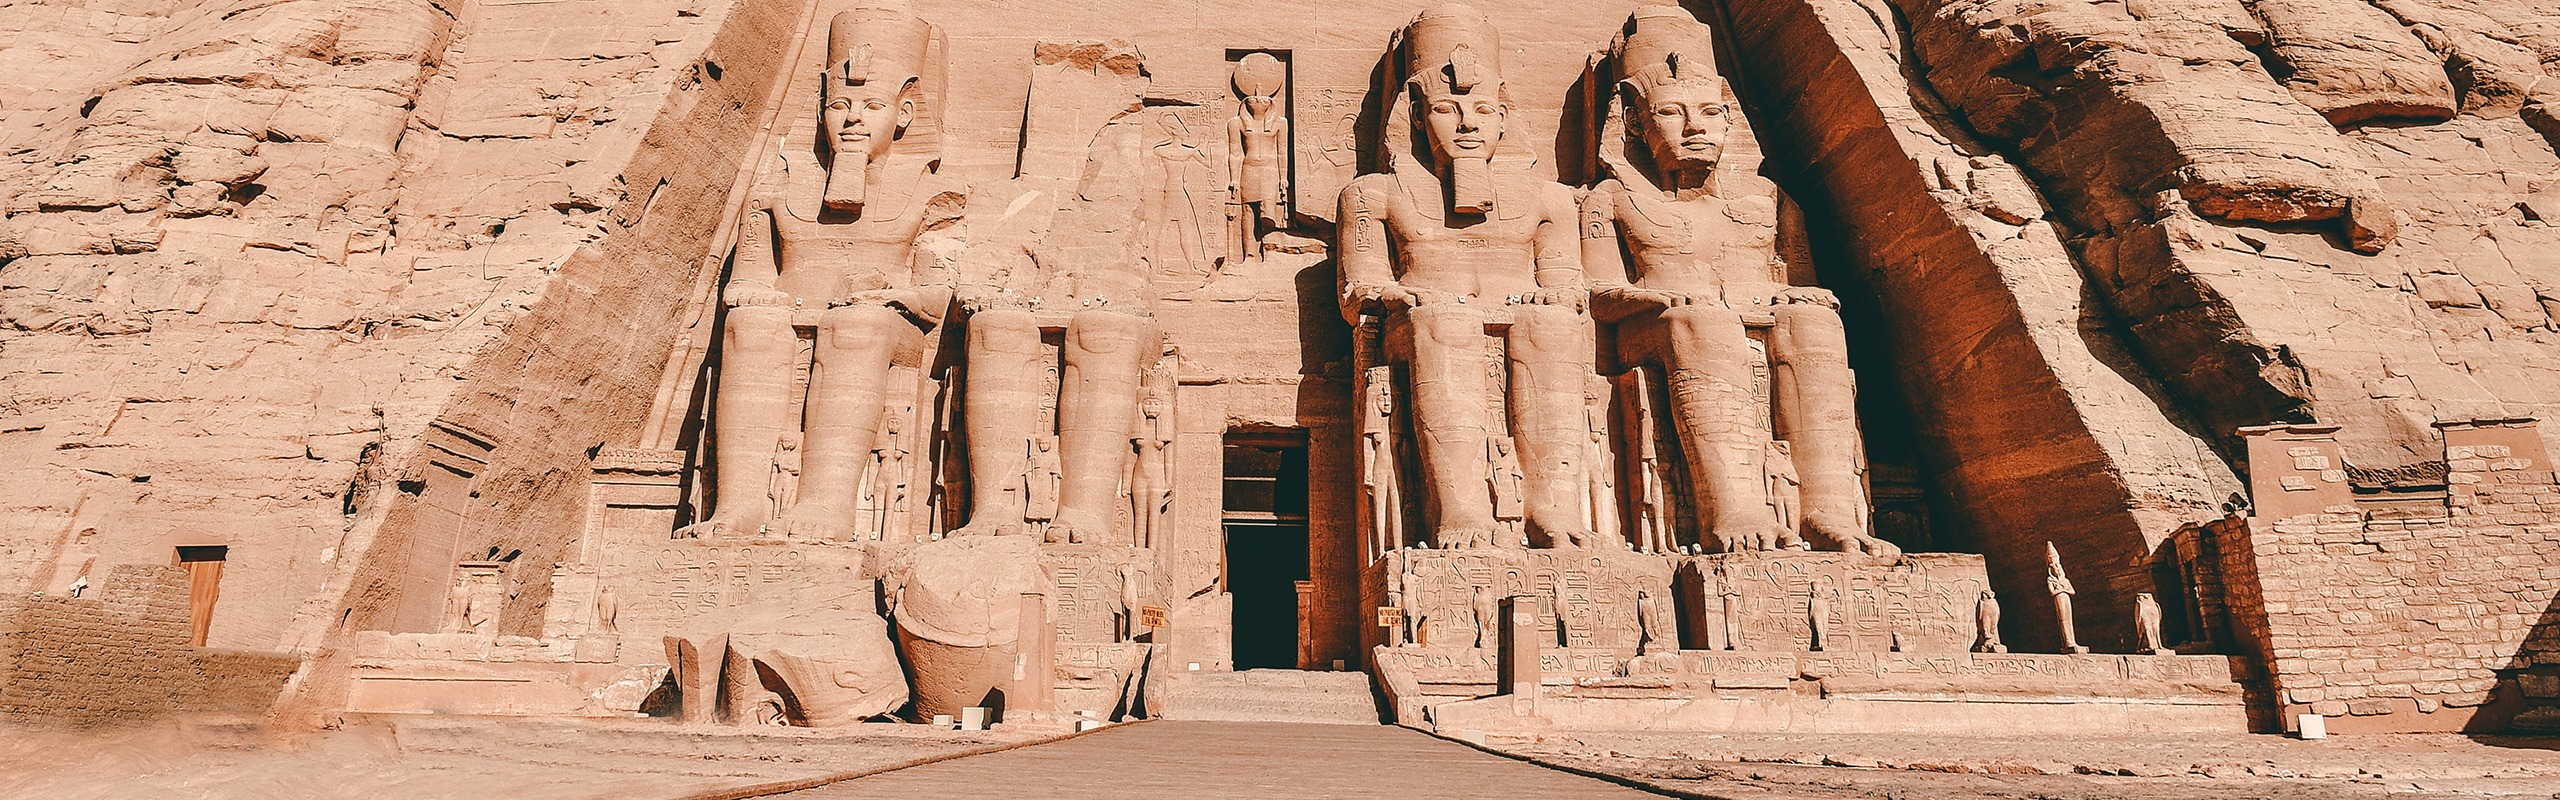 12-Day Egypt Luxury Tour with Abu Simbel 